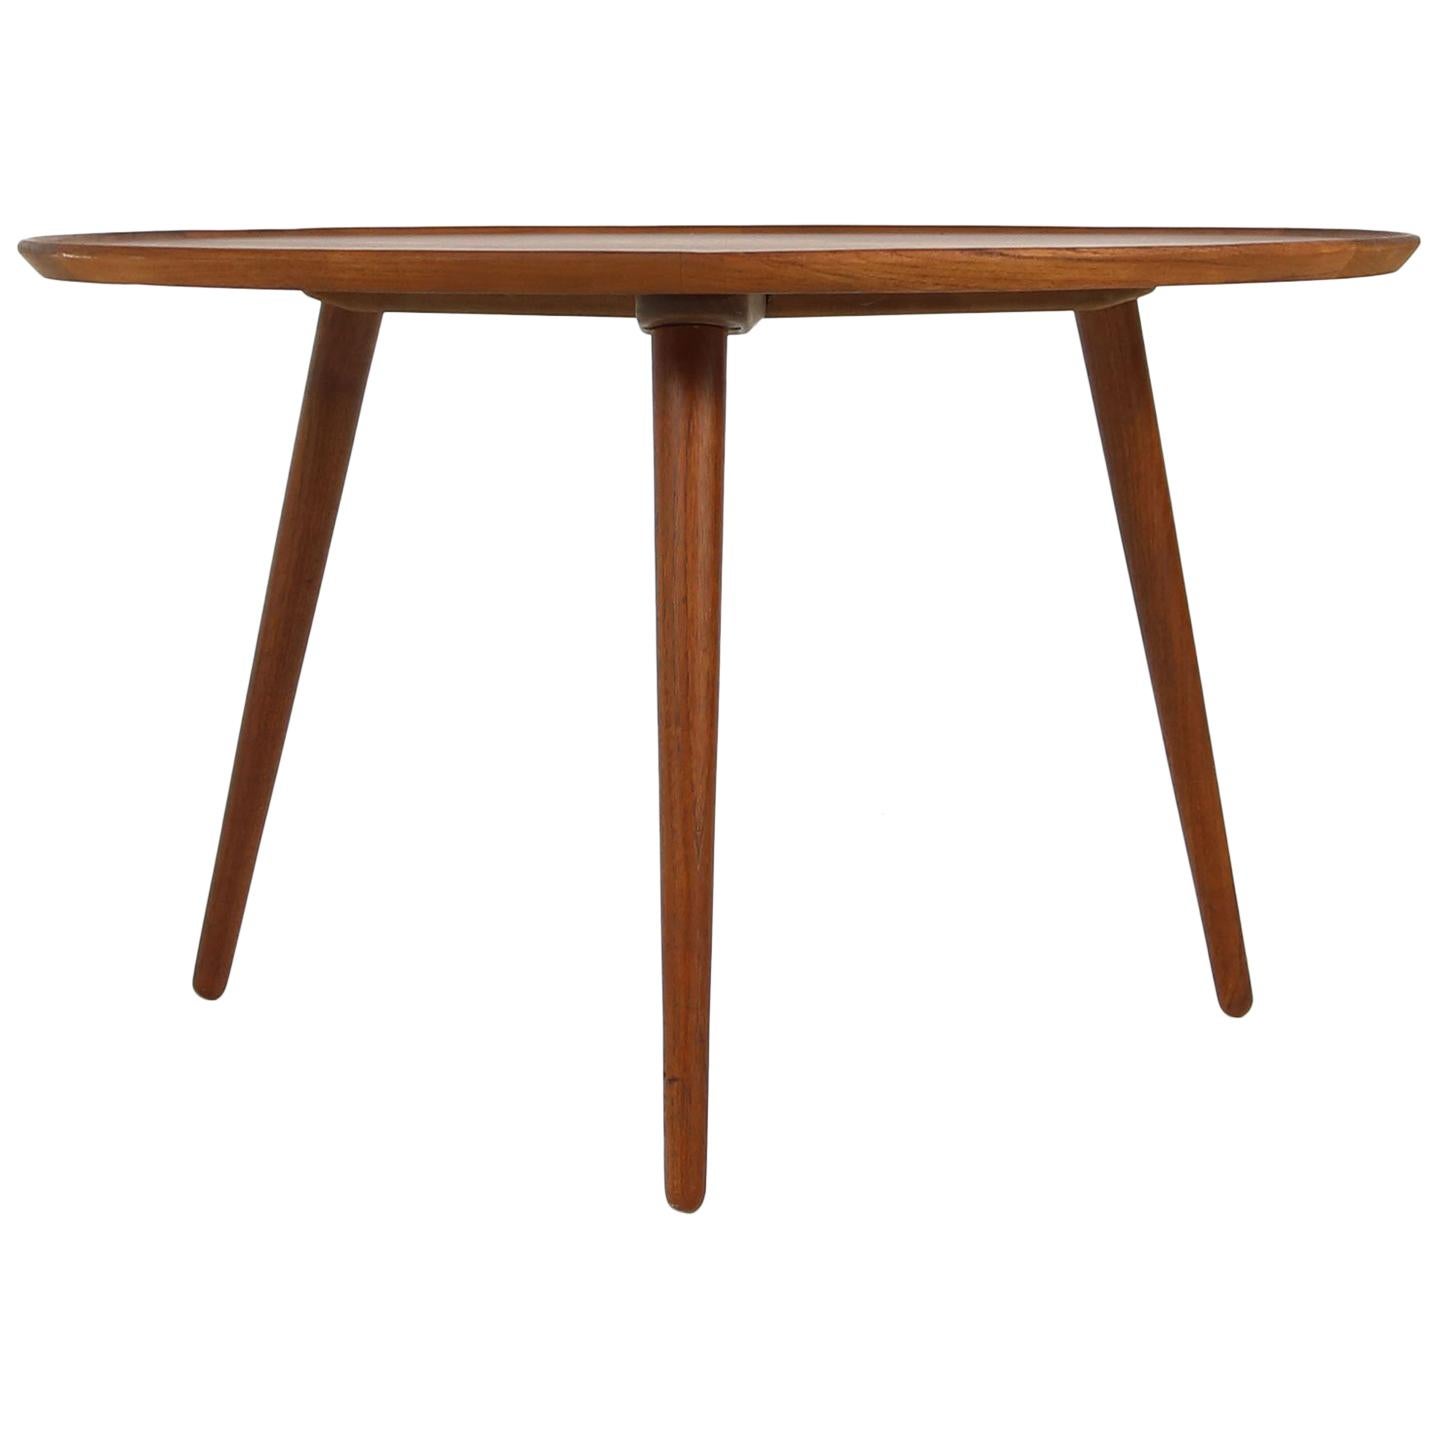 1960s Danish Modern Round Tripod Teak Coffee Table Mid-Century Modern Design